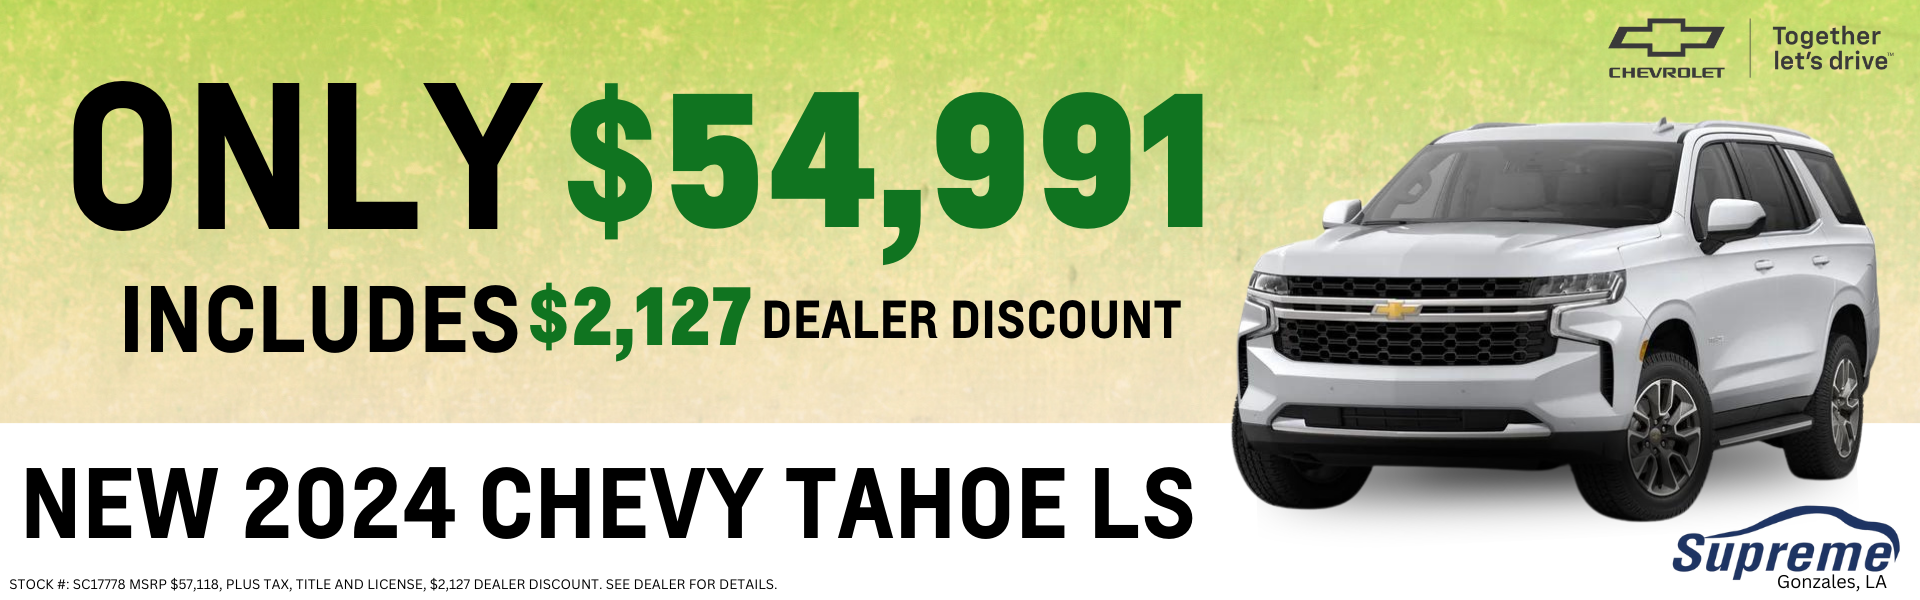 New 2024 Chevy Tahoe LS